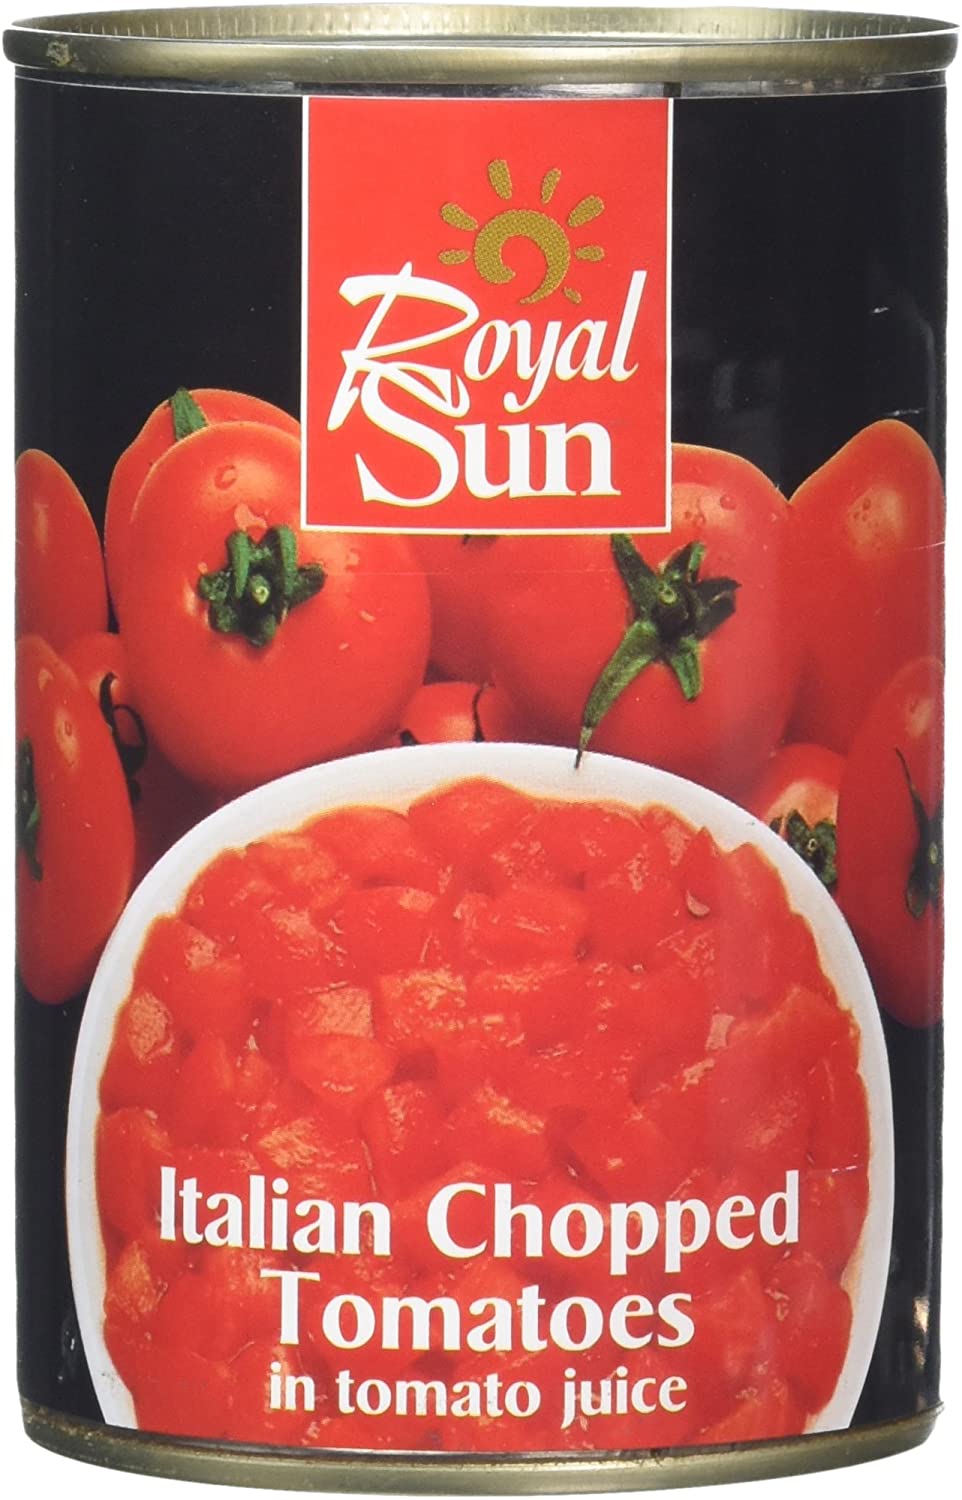 Royal Sun Chopped Tomatoes